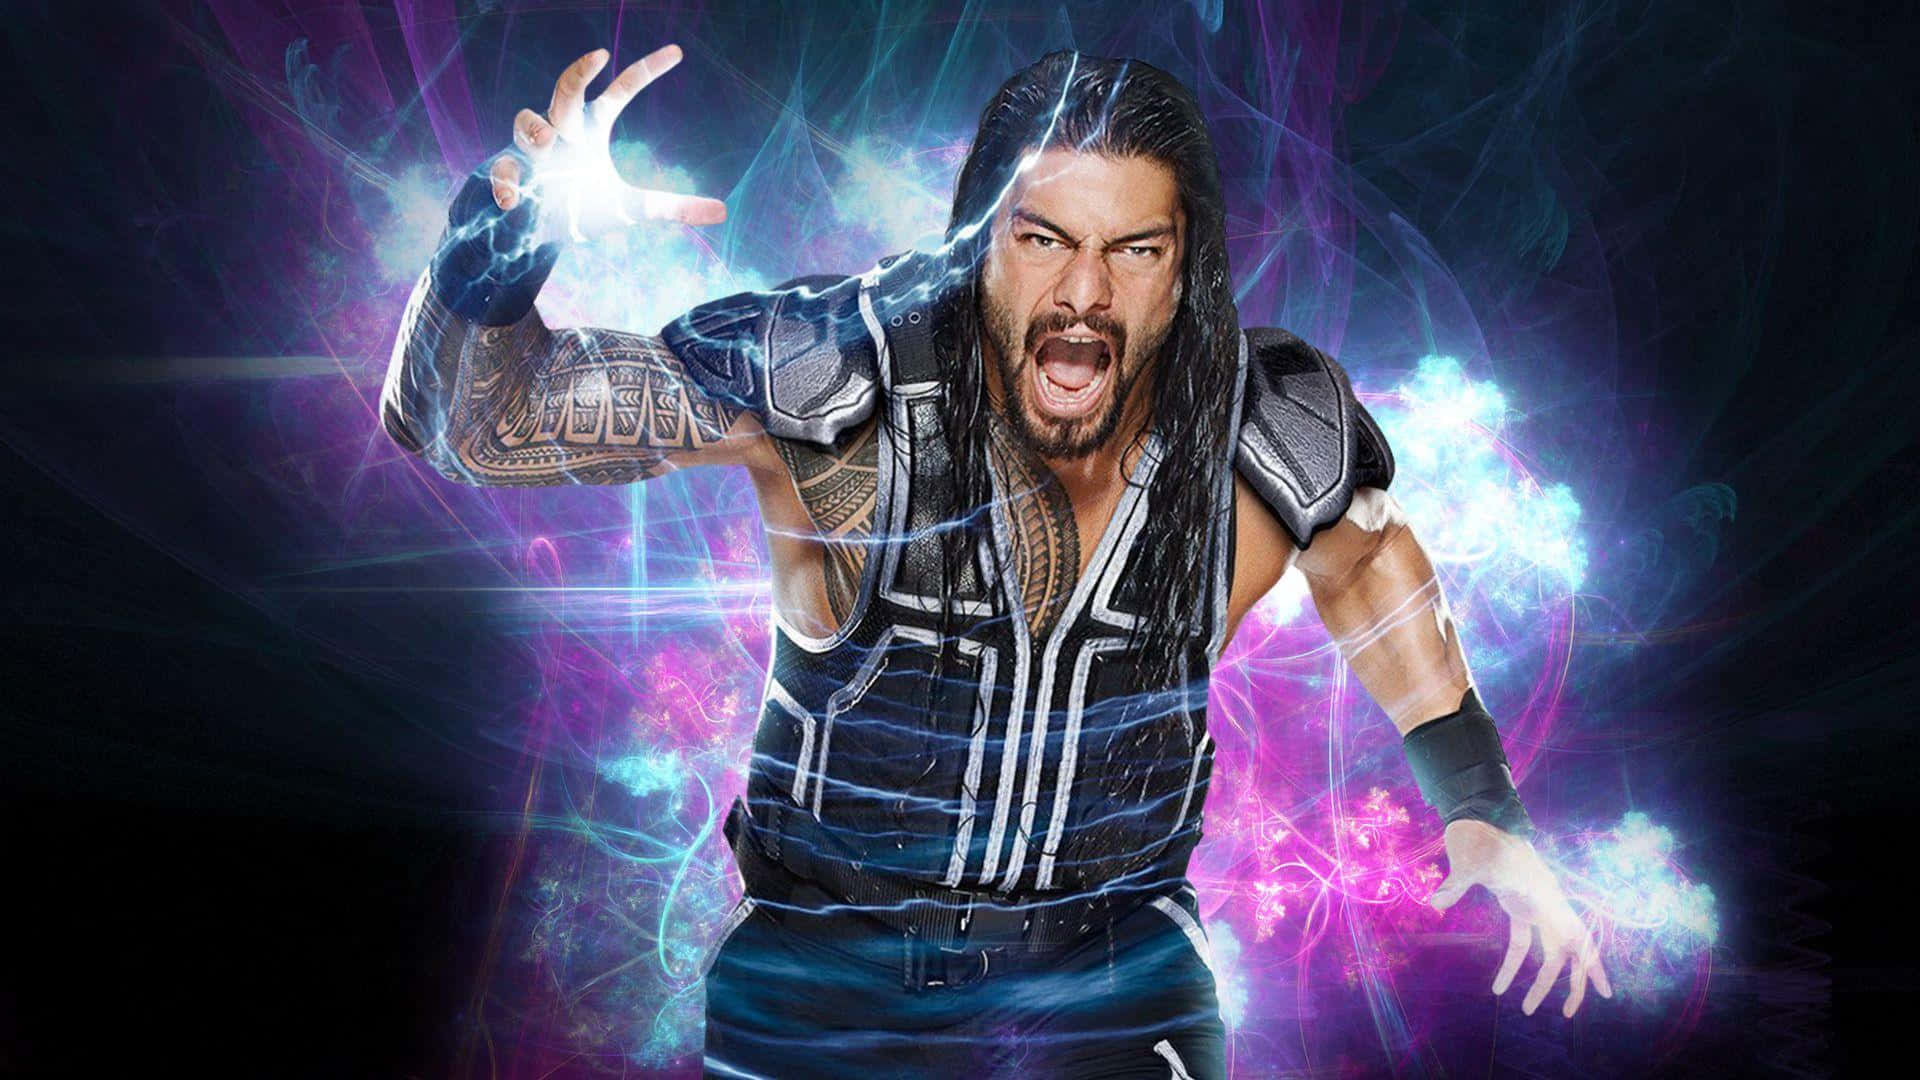 Roman Reigns - The Hardcore WWER Superstar